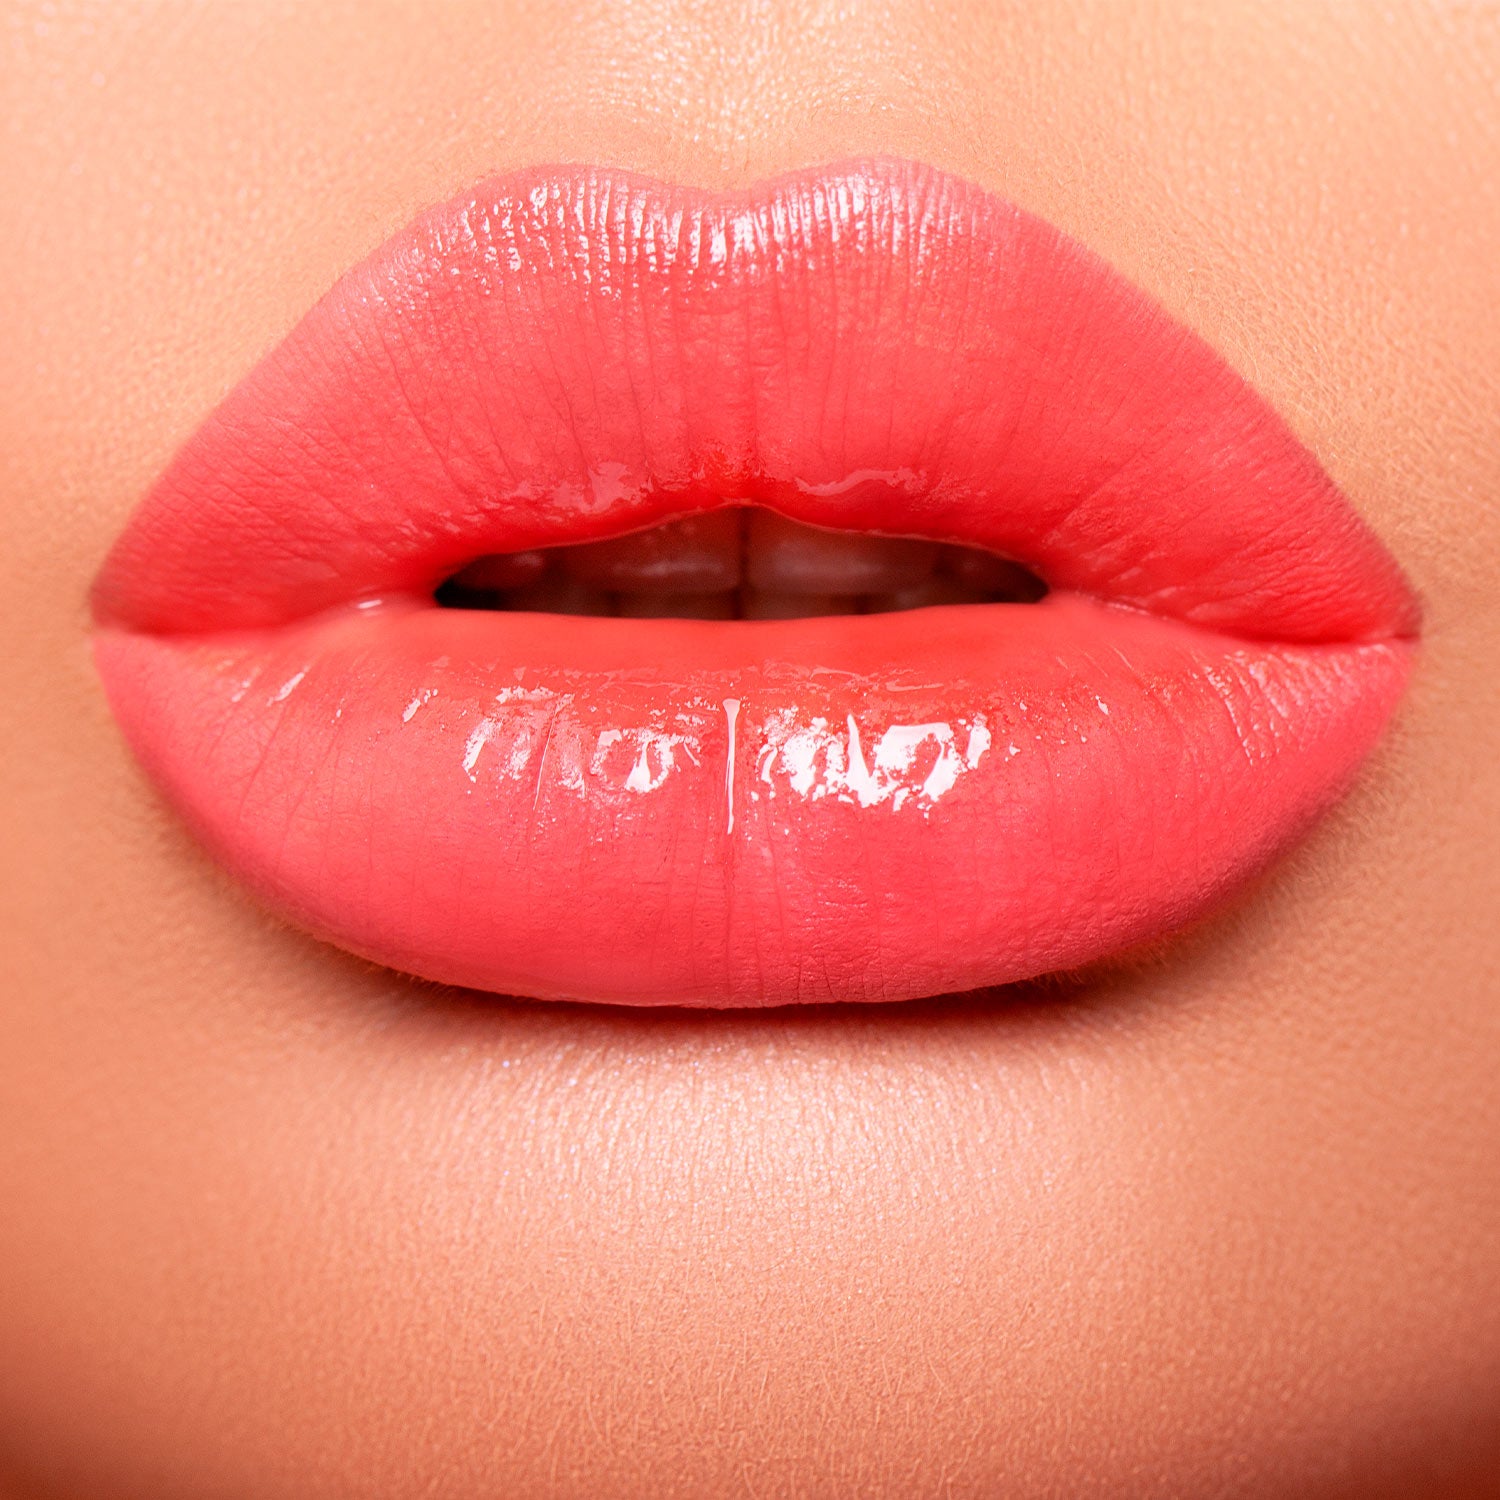 Lip Gloss Plumping